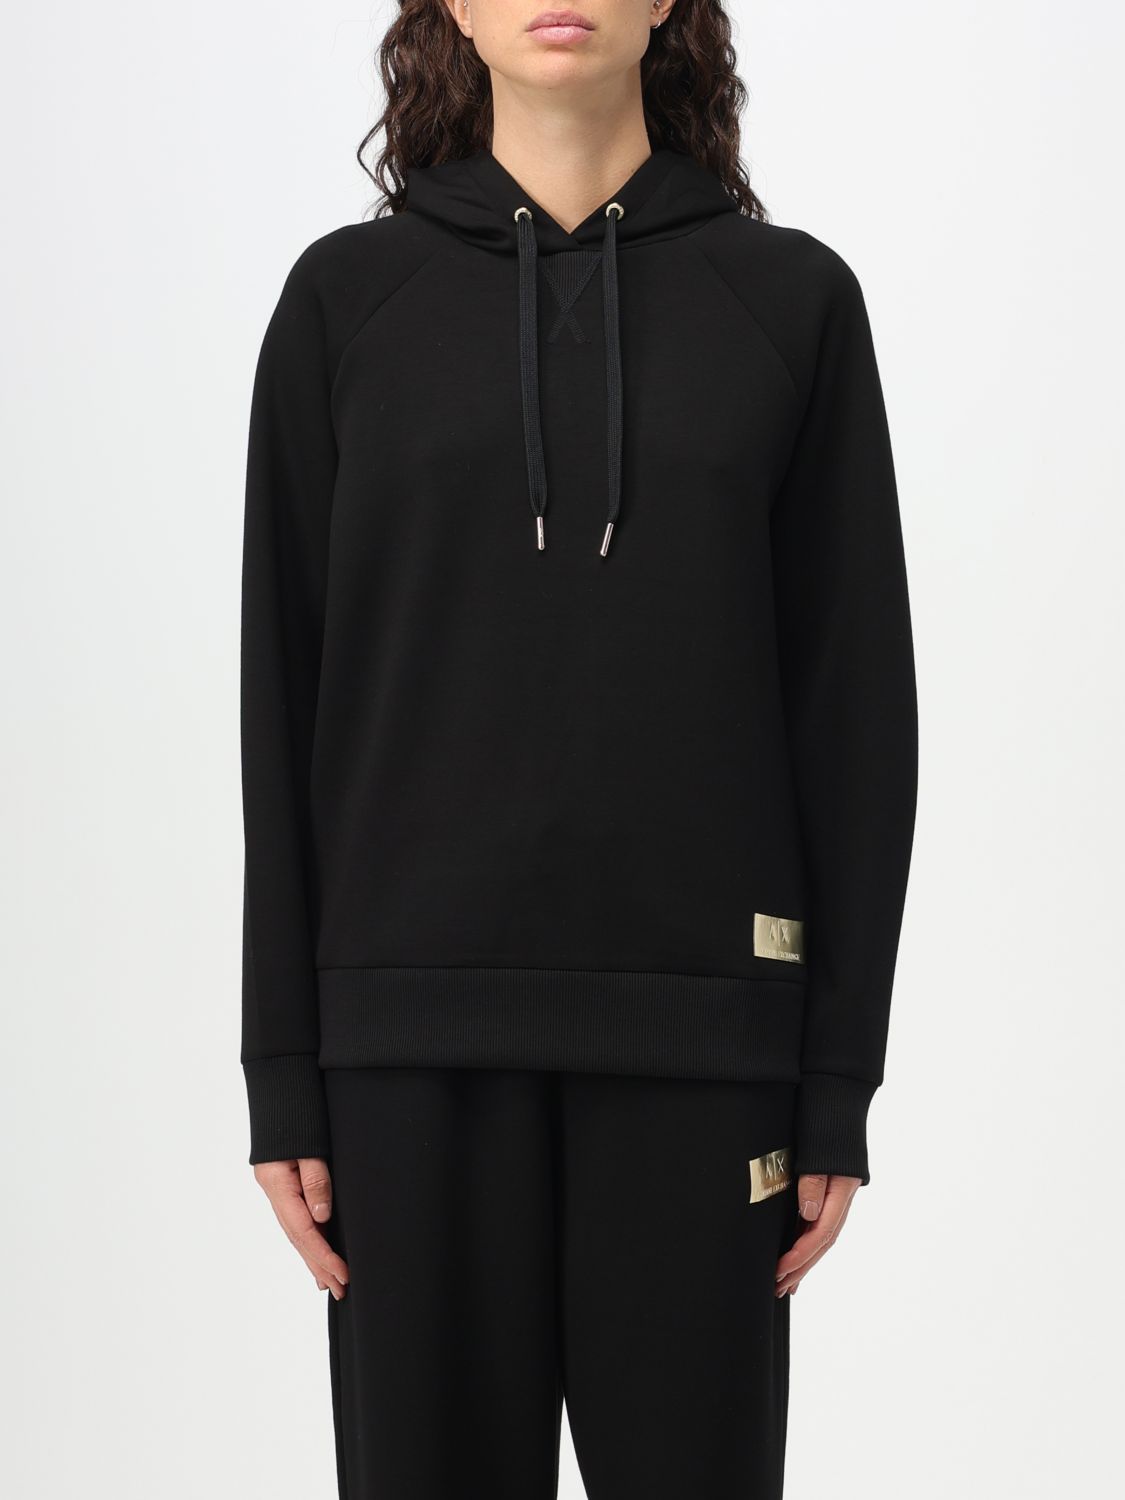 Armani Exchange Sweatshirt  Woman Colour Black